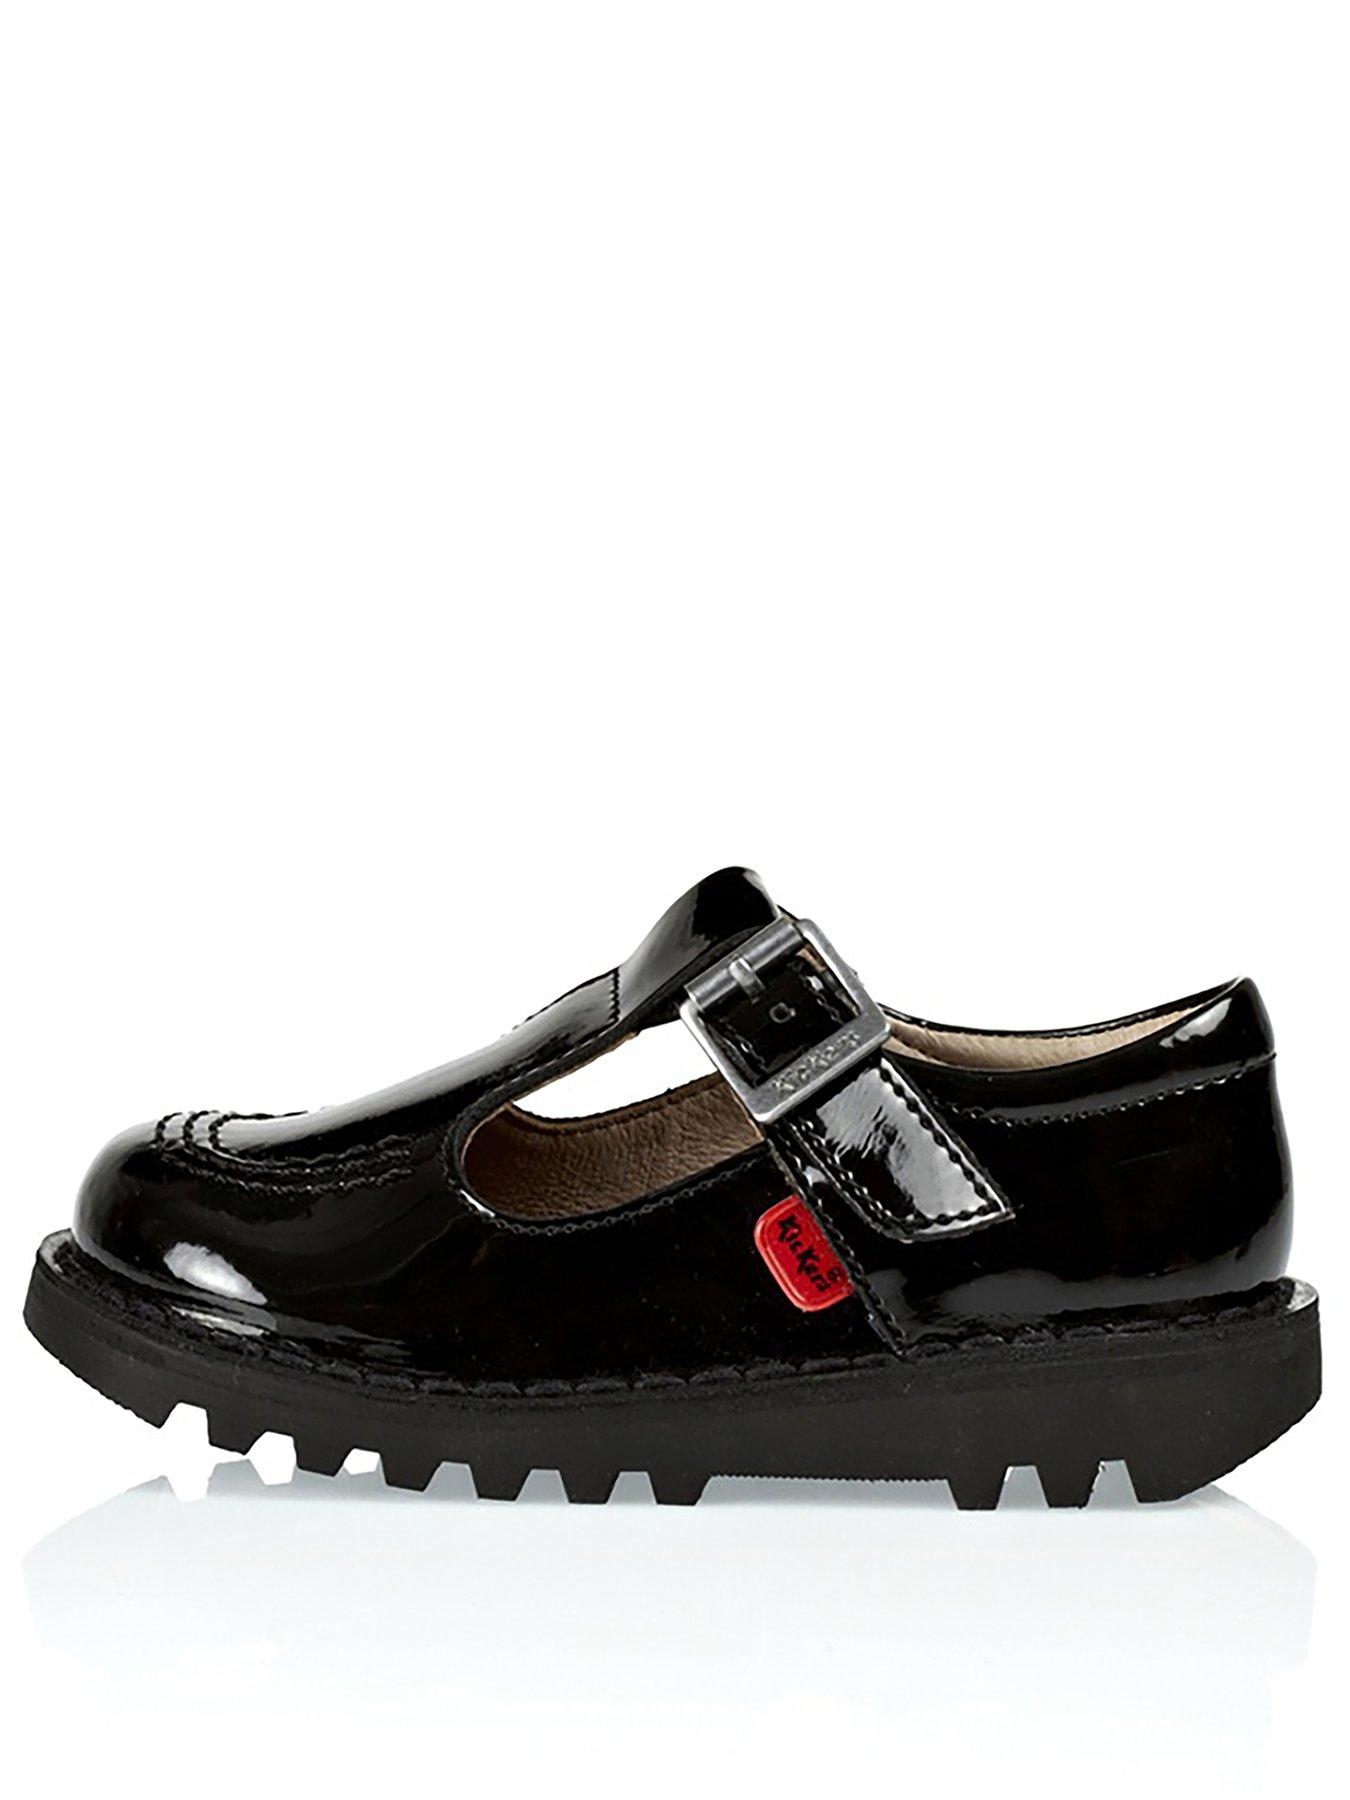 Details about   Unisex Kids Junior Kickers Kick Hi Black Patent Back To School Shoes All Sizes 